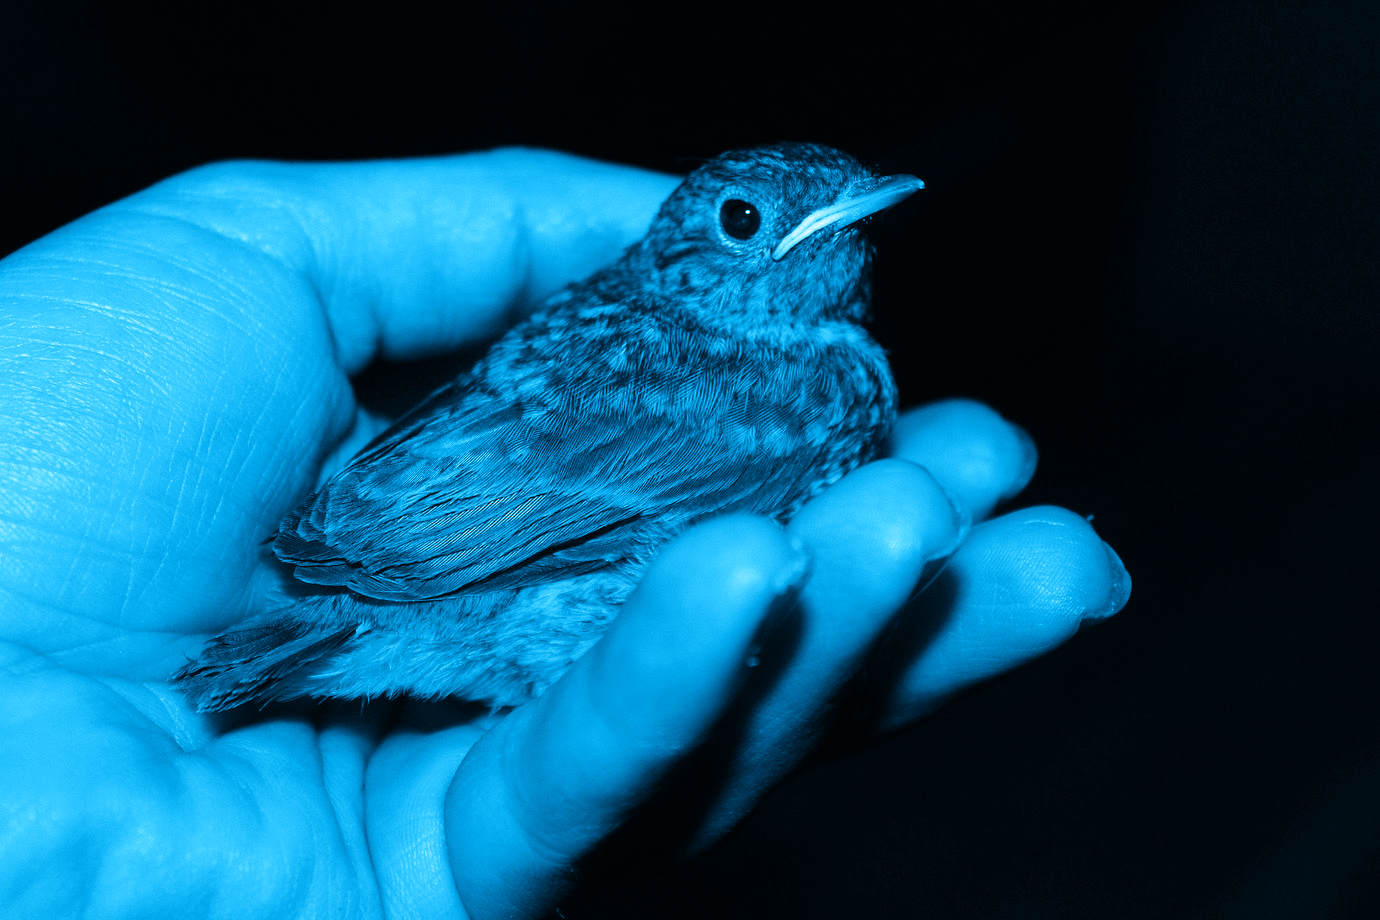 Image of bird inside human hand